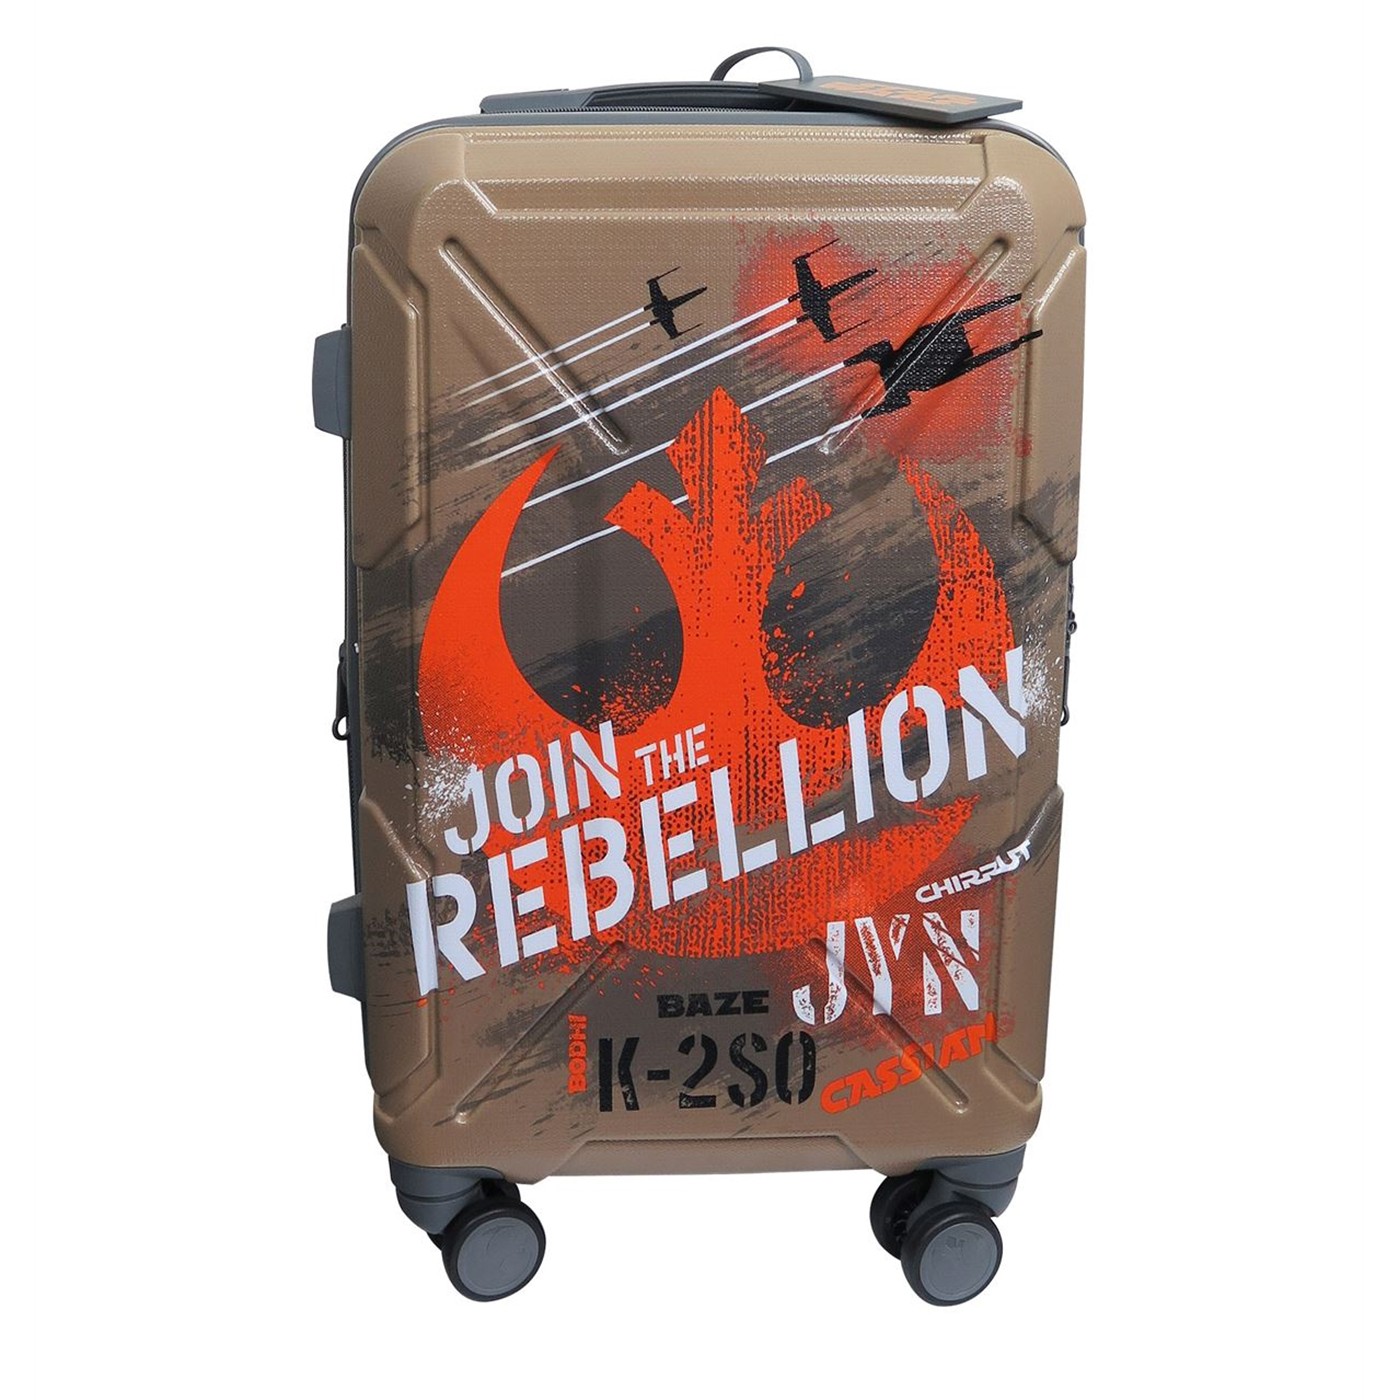 Romanschrijver Ontwaken enz Star Wars Rogue One LTD Rebel Samsonite Suitcase